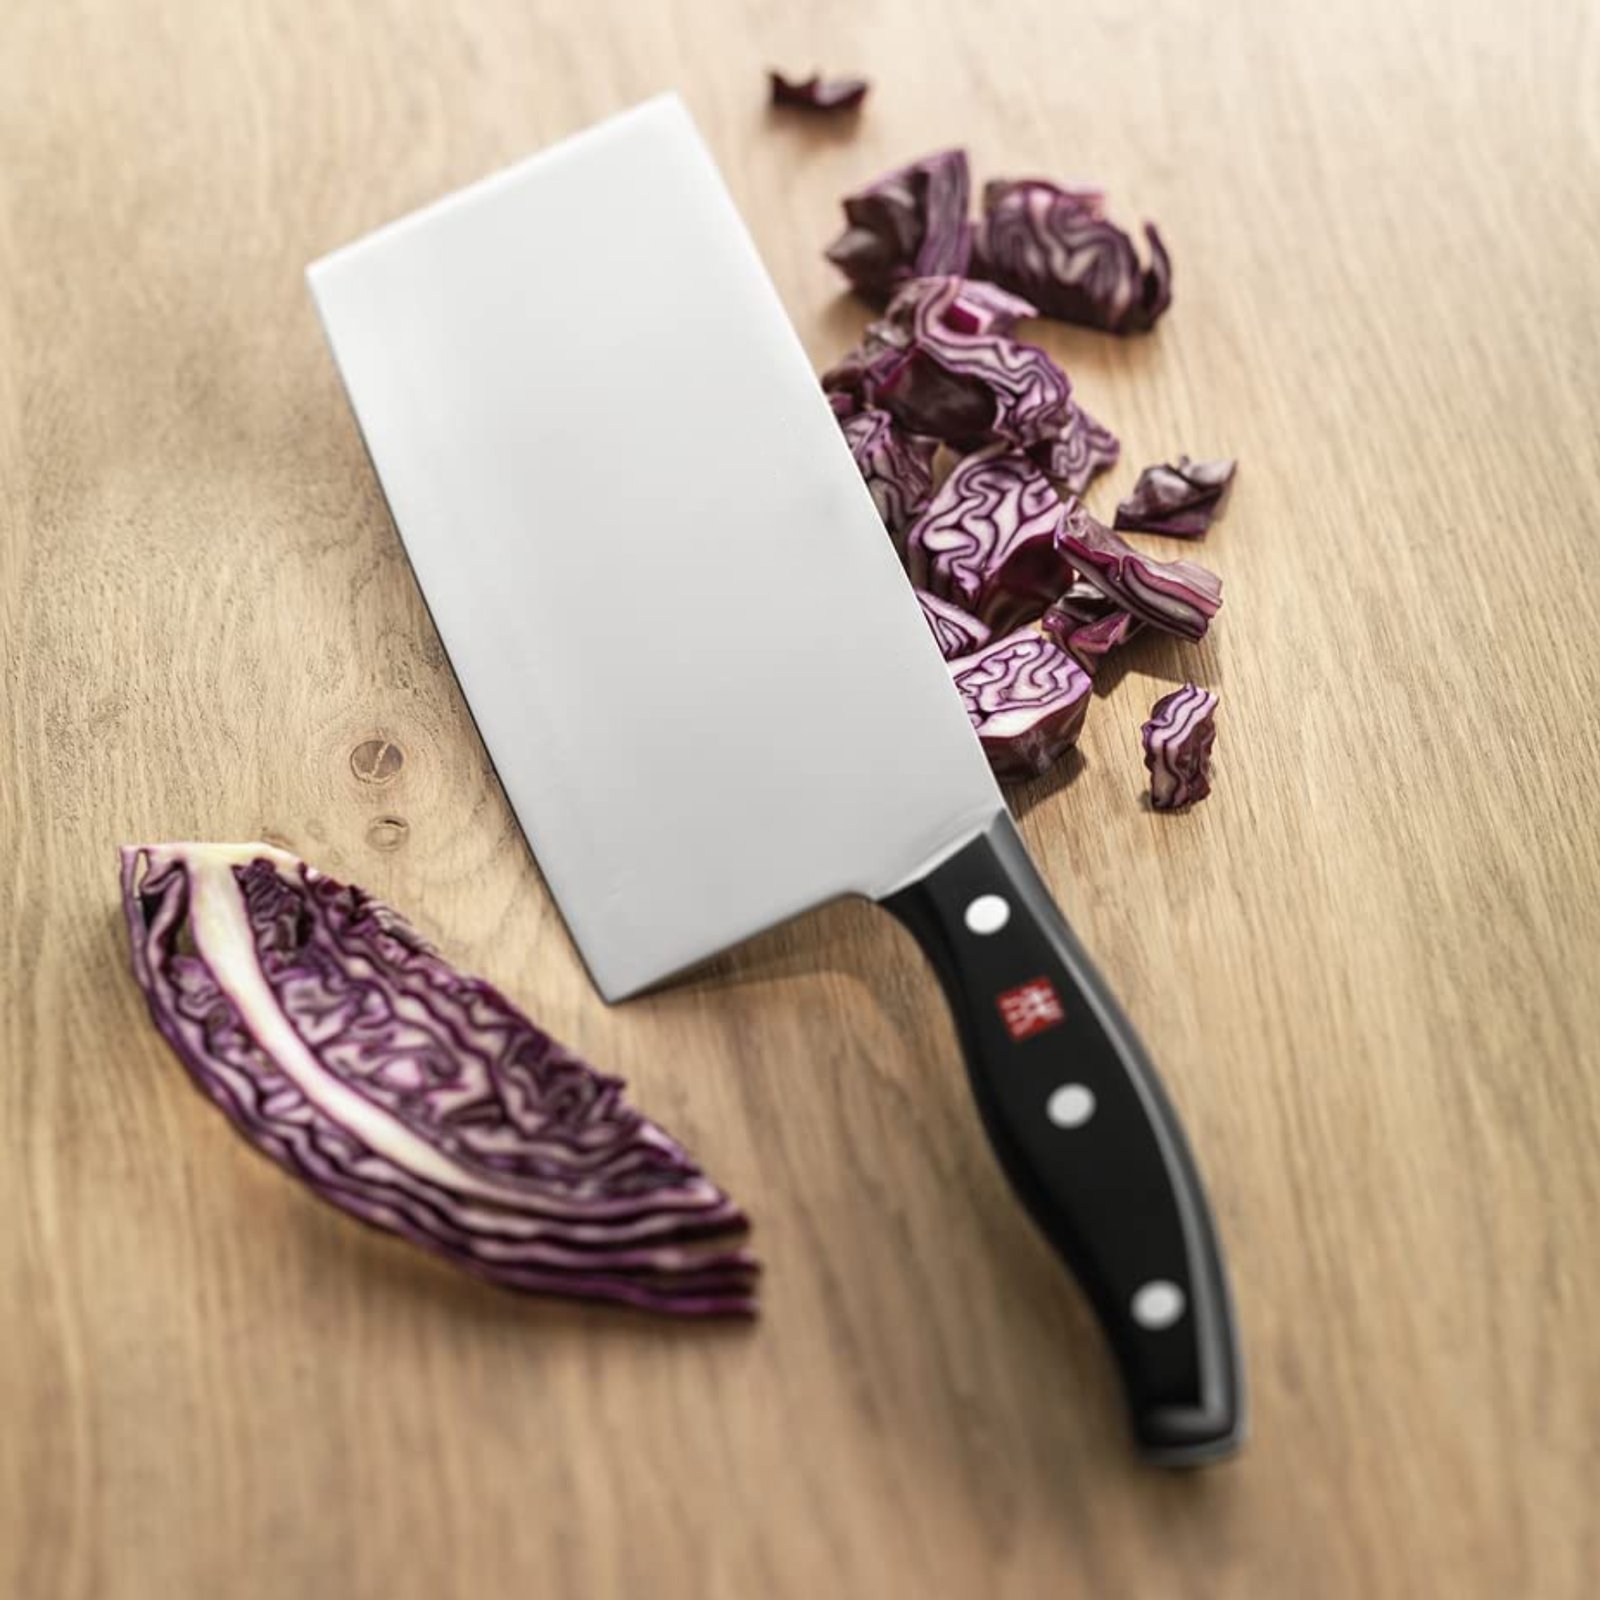 cleaver knife 7 inch.jpg